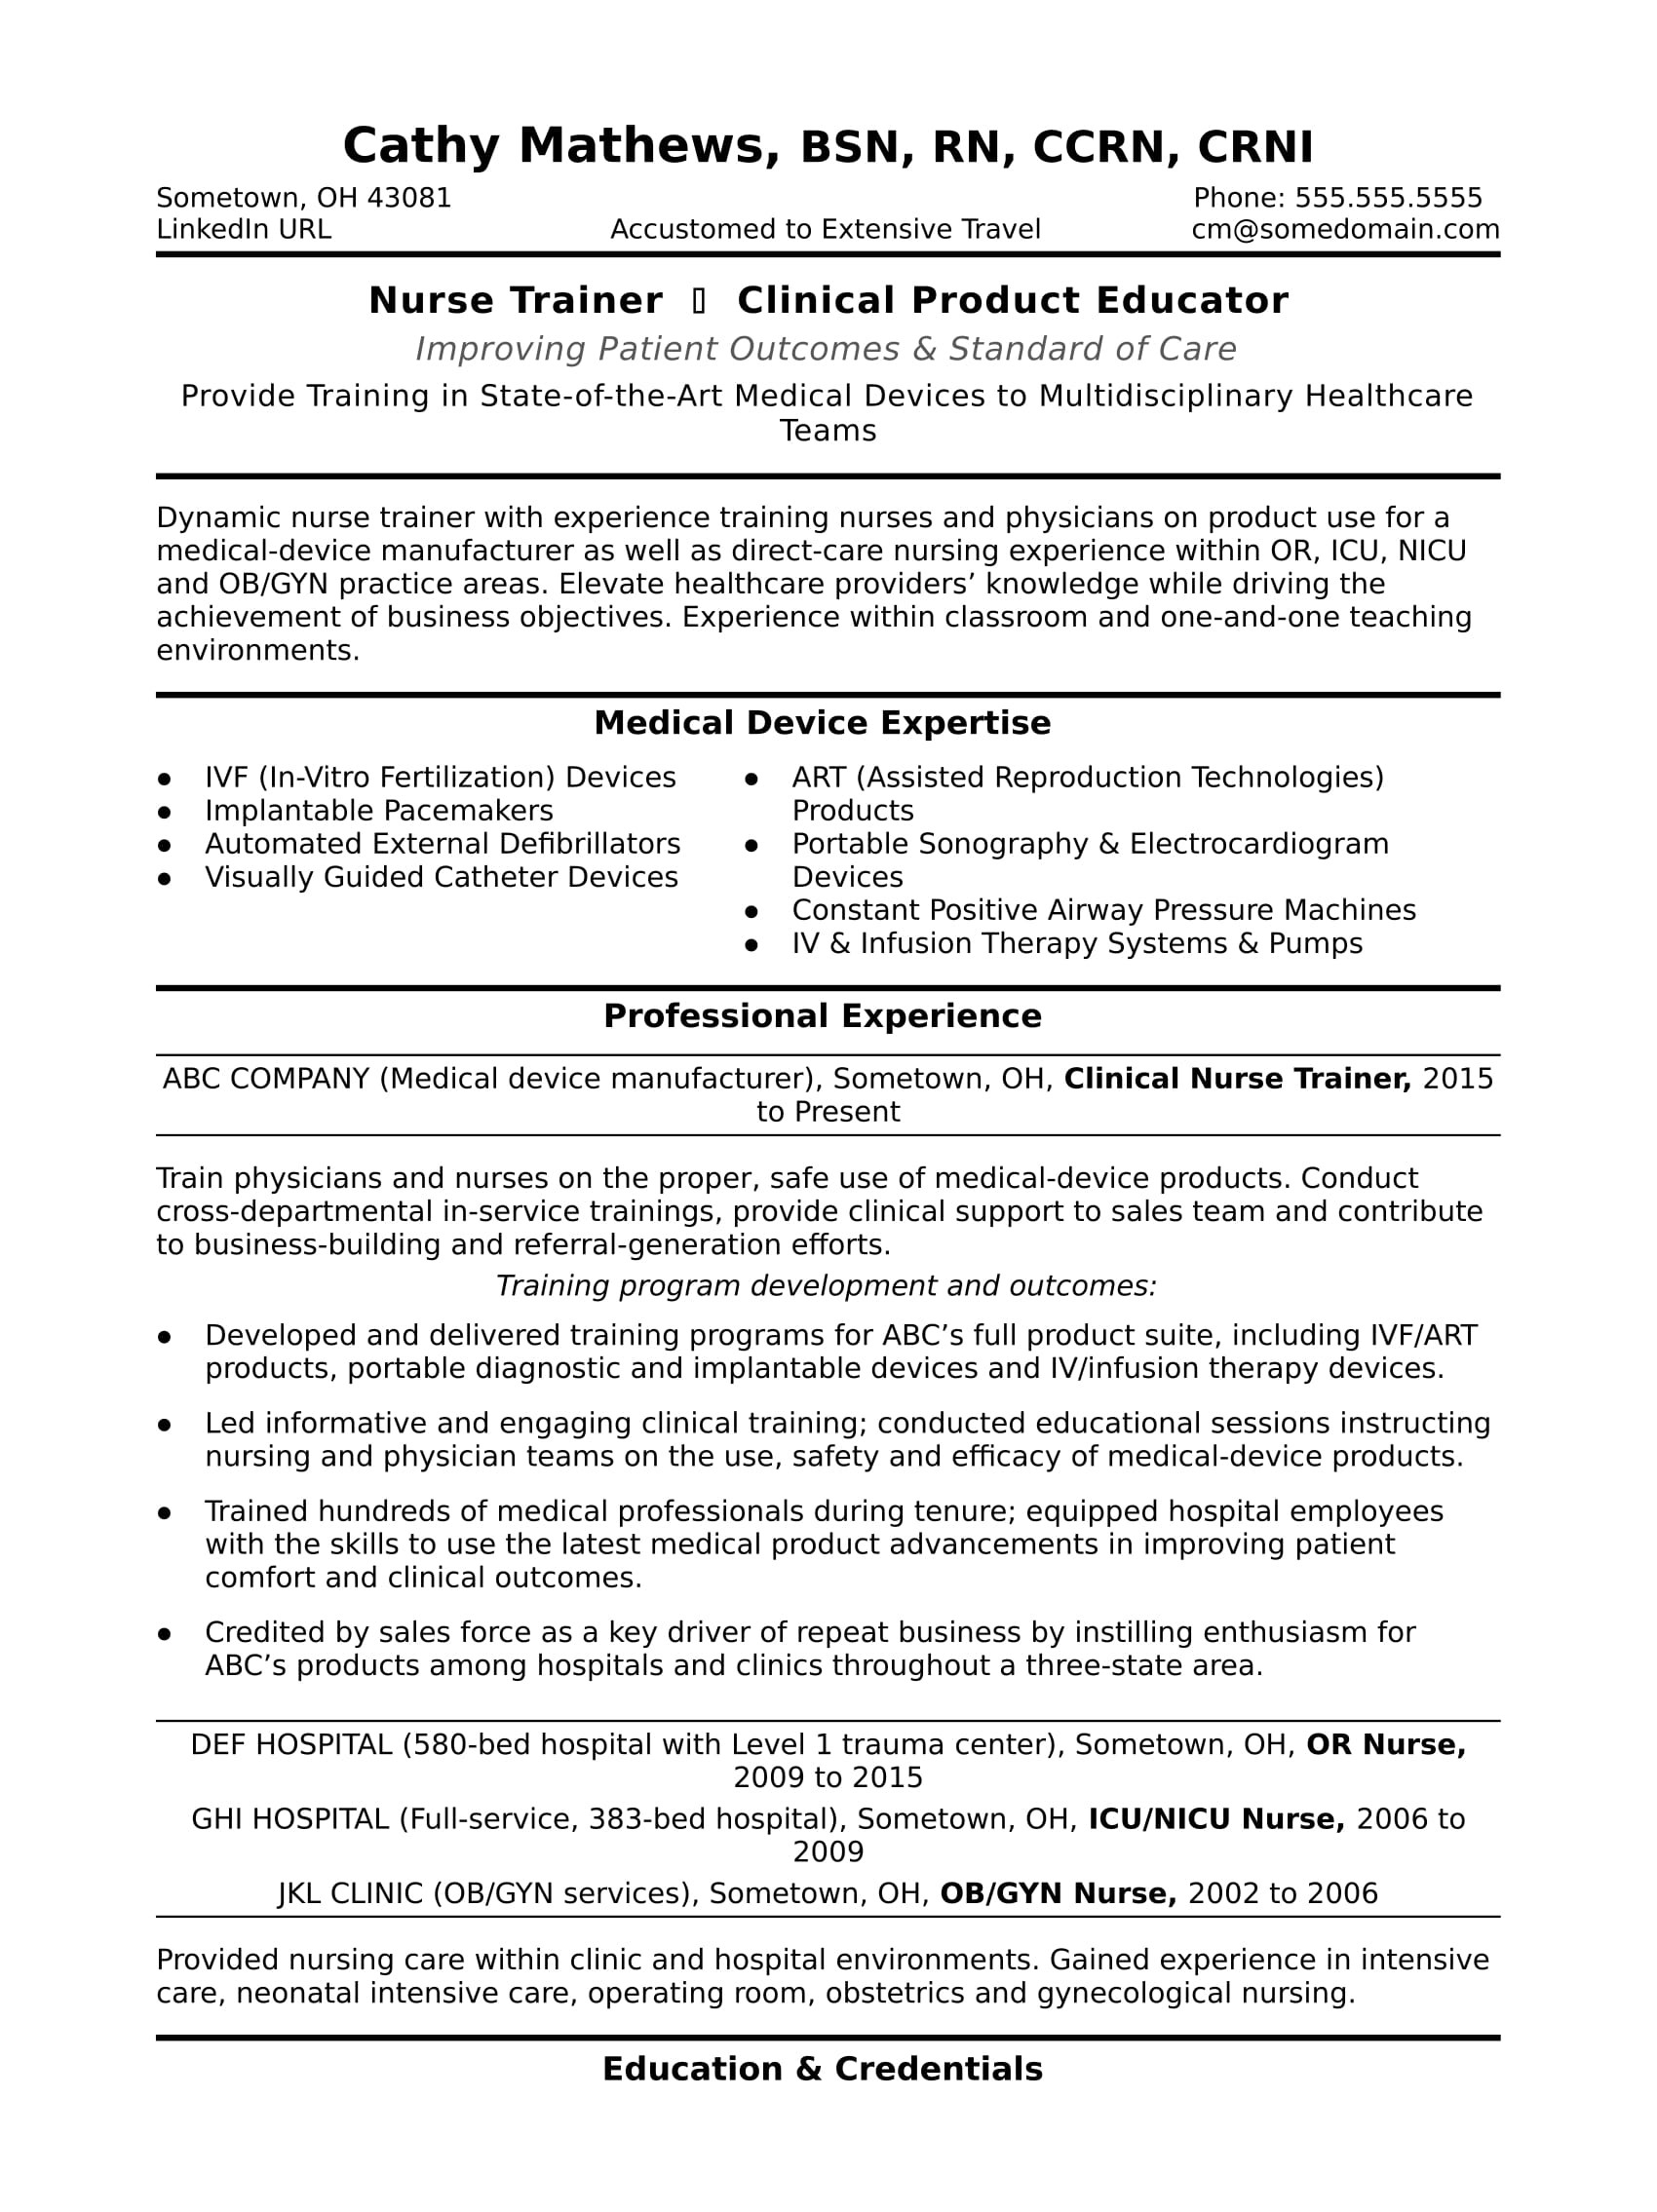 Sample Of Objectives In Resume for Nurses Nurse Trainer Resume Sample Monster.com